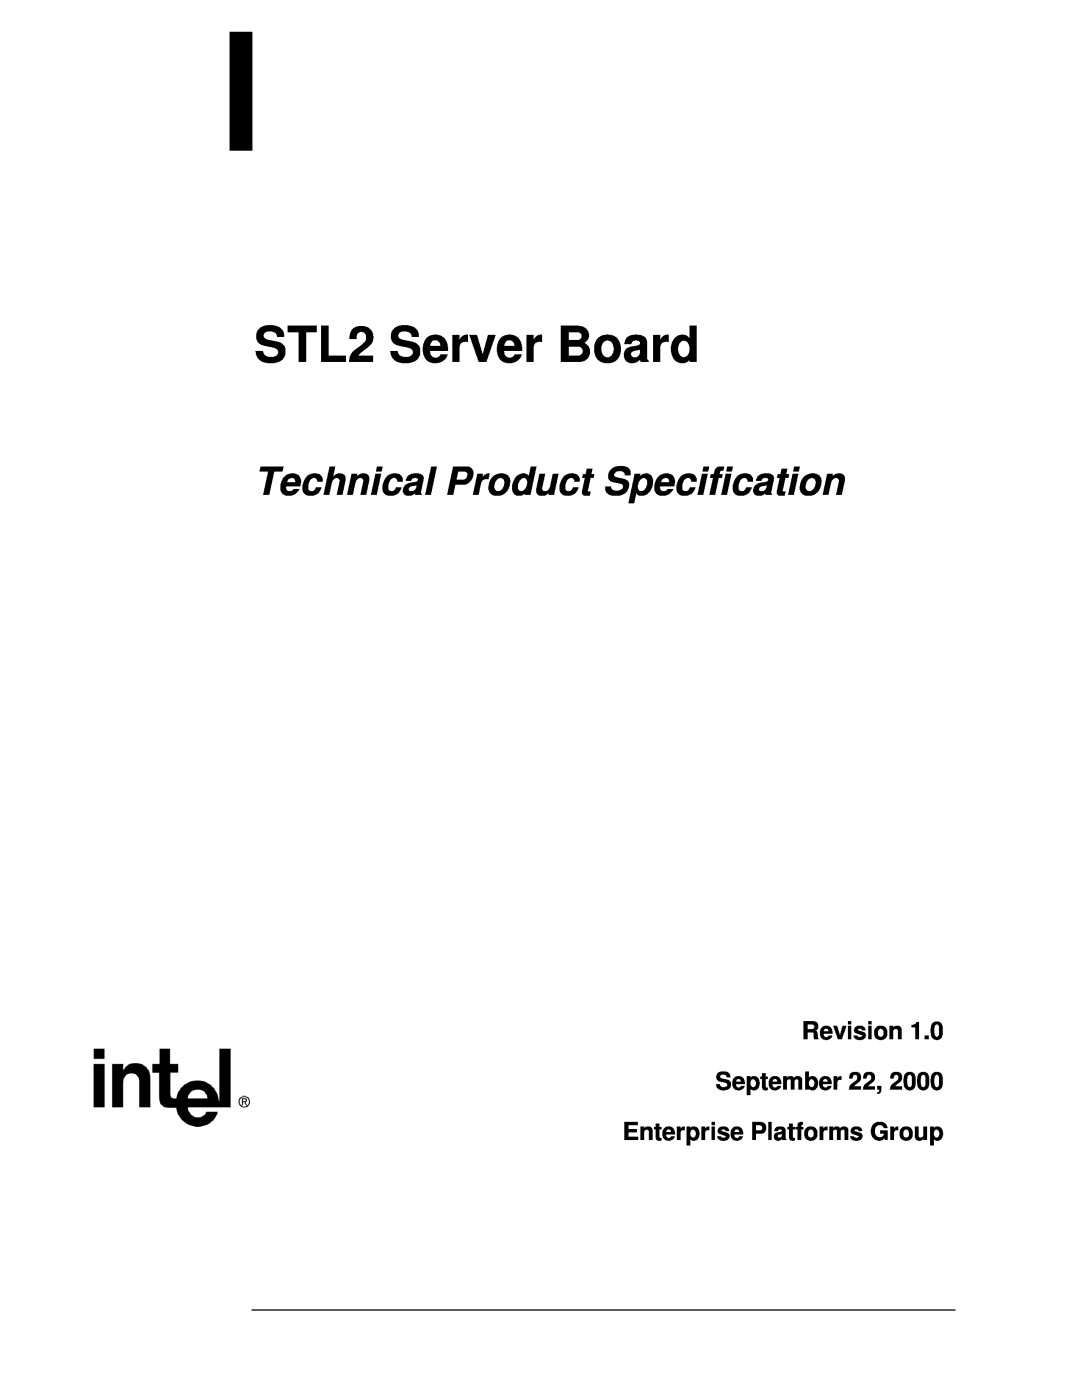 Intel manual Revision September 22, Enterprise Platforms Group, STL2 Server Board, Technical Product Specification 